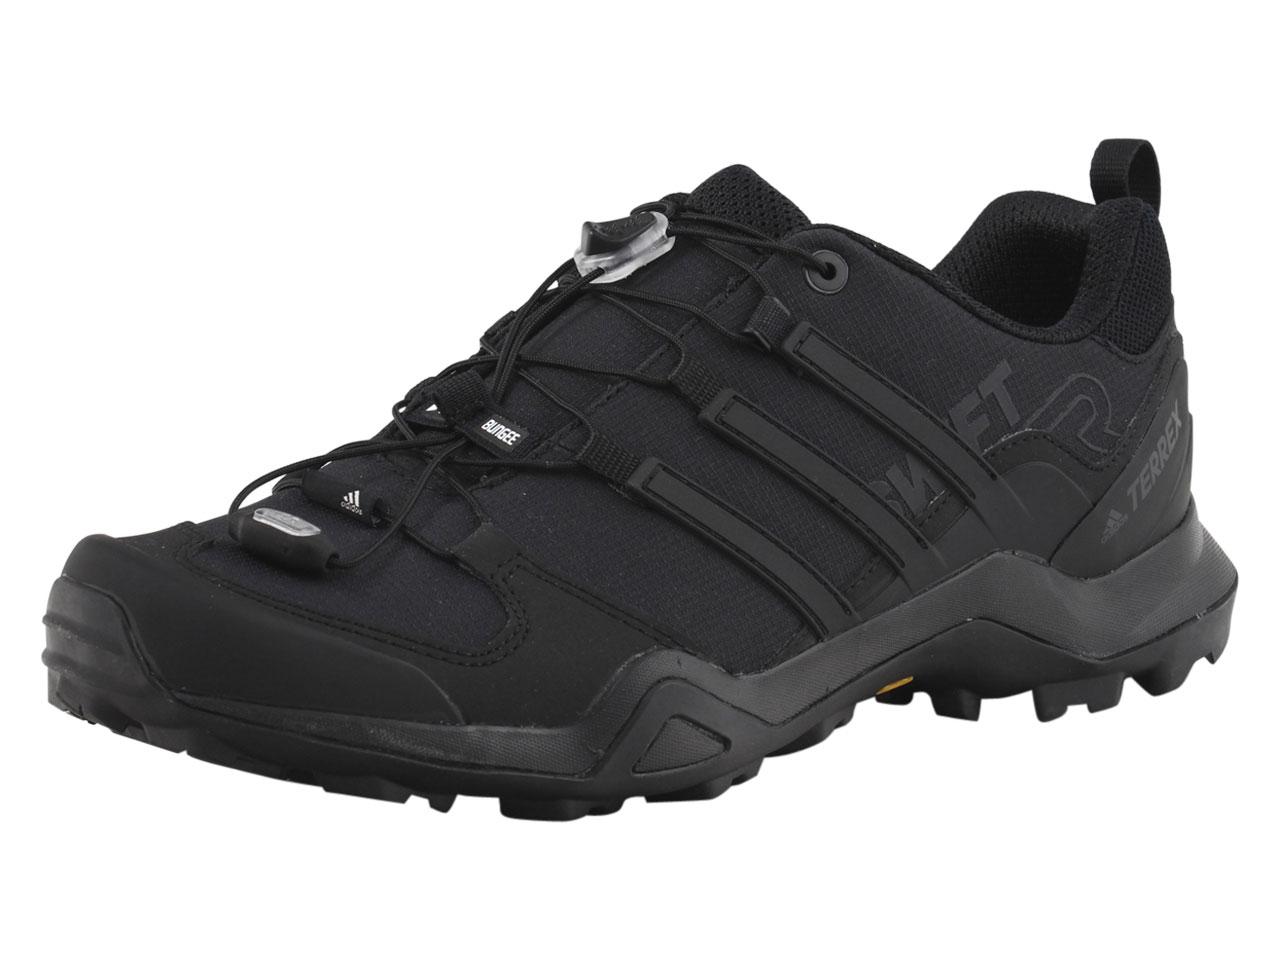 Adidas Men's Terrex Swift R2 Hiking Sneakers Shoes - Black/Black/Black - 8 D(M) US